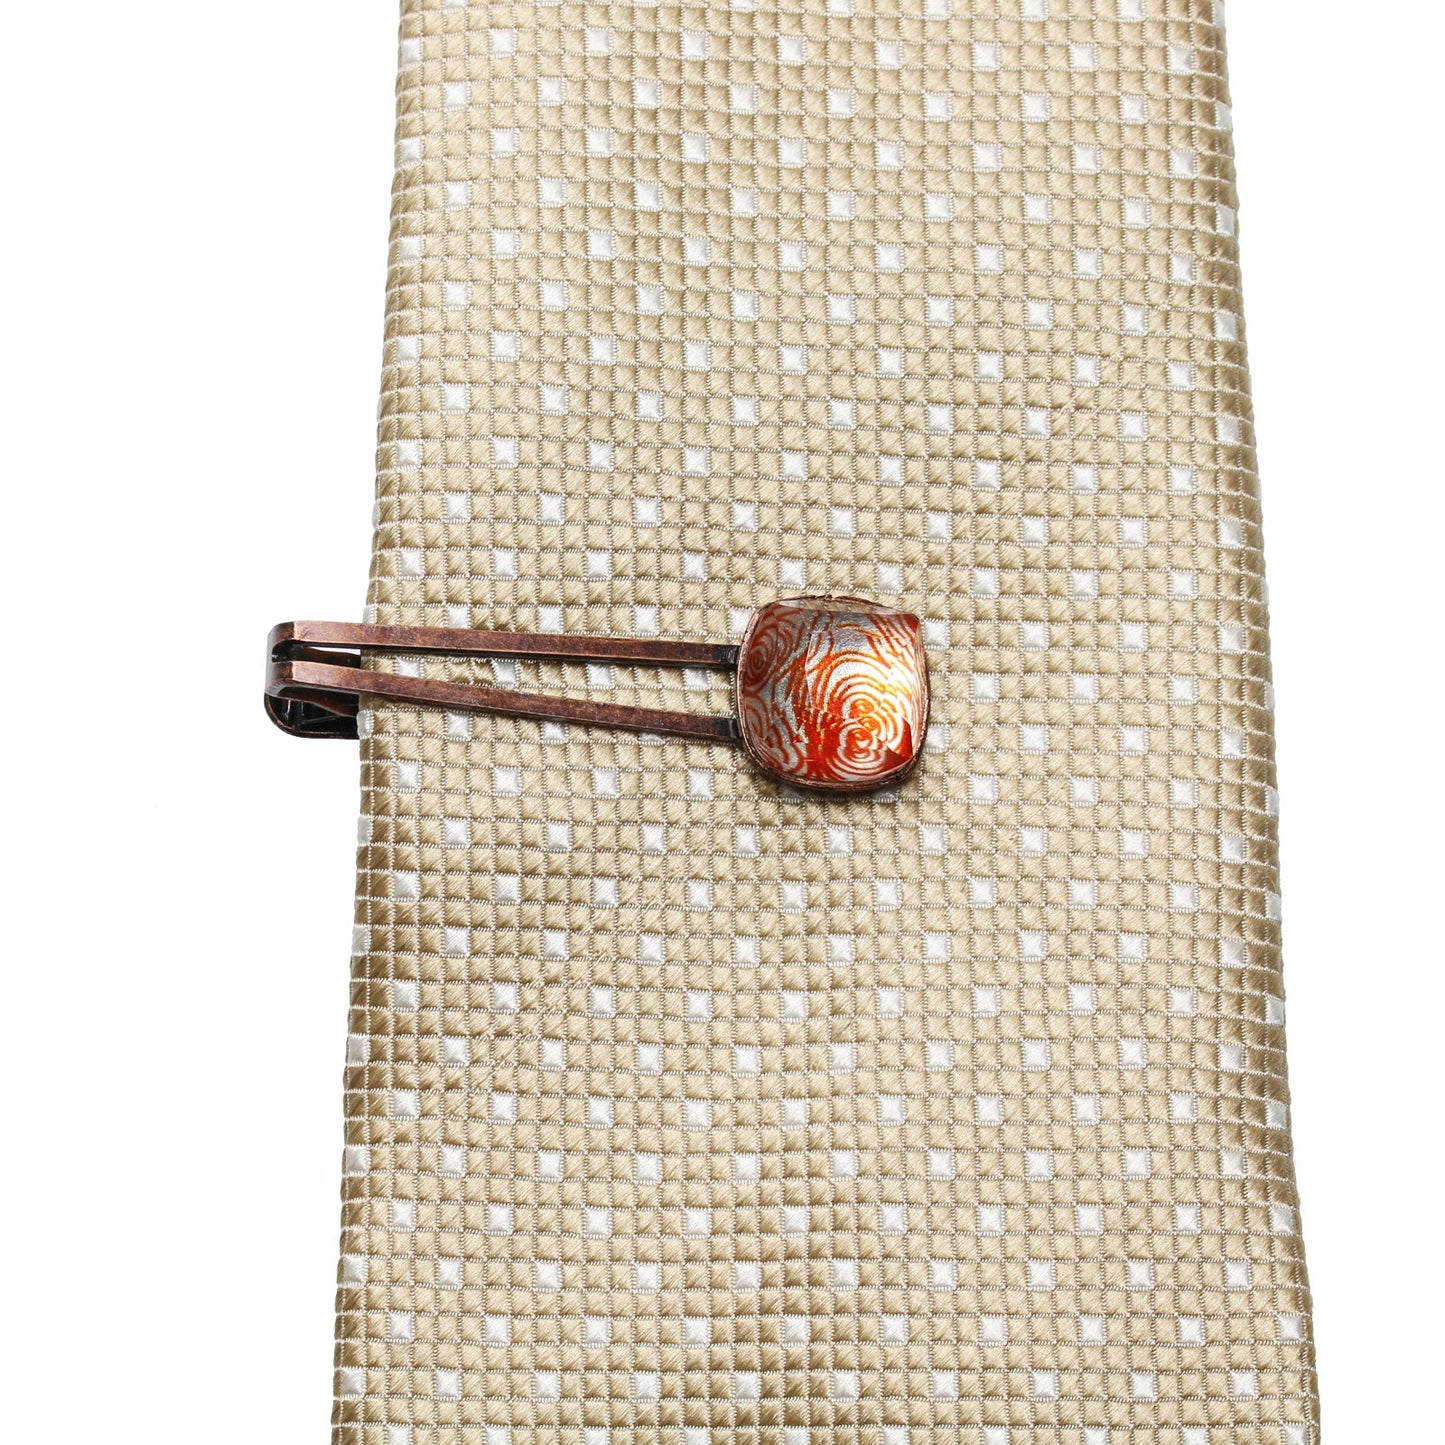 Simple Tie Clip Orange Square Gift TAMARUSAN